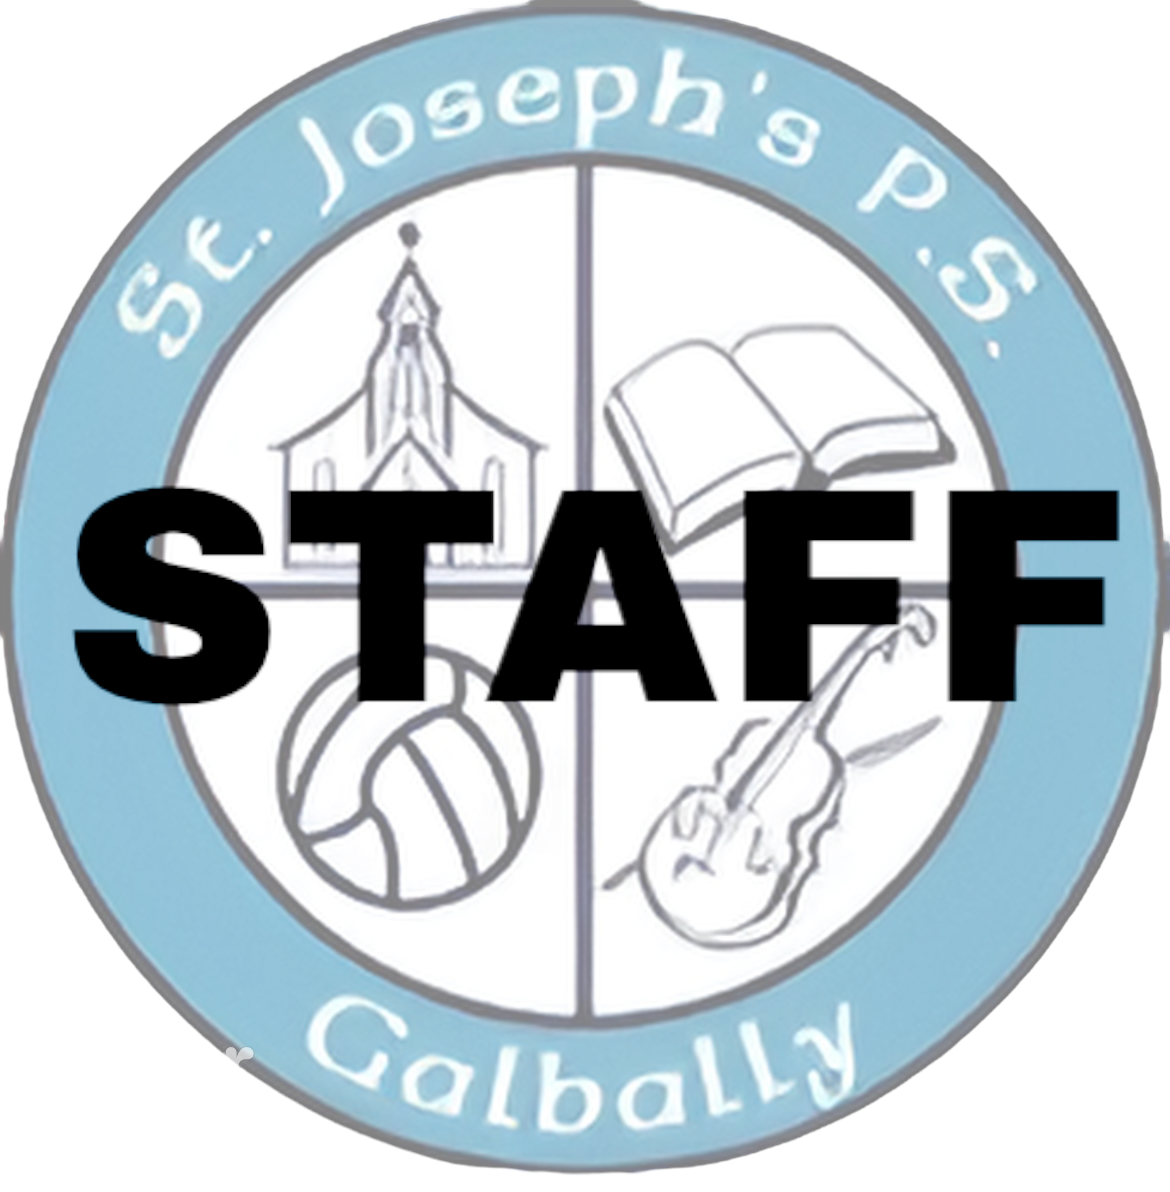 St Joseph’s PS Galbally Staff